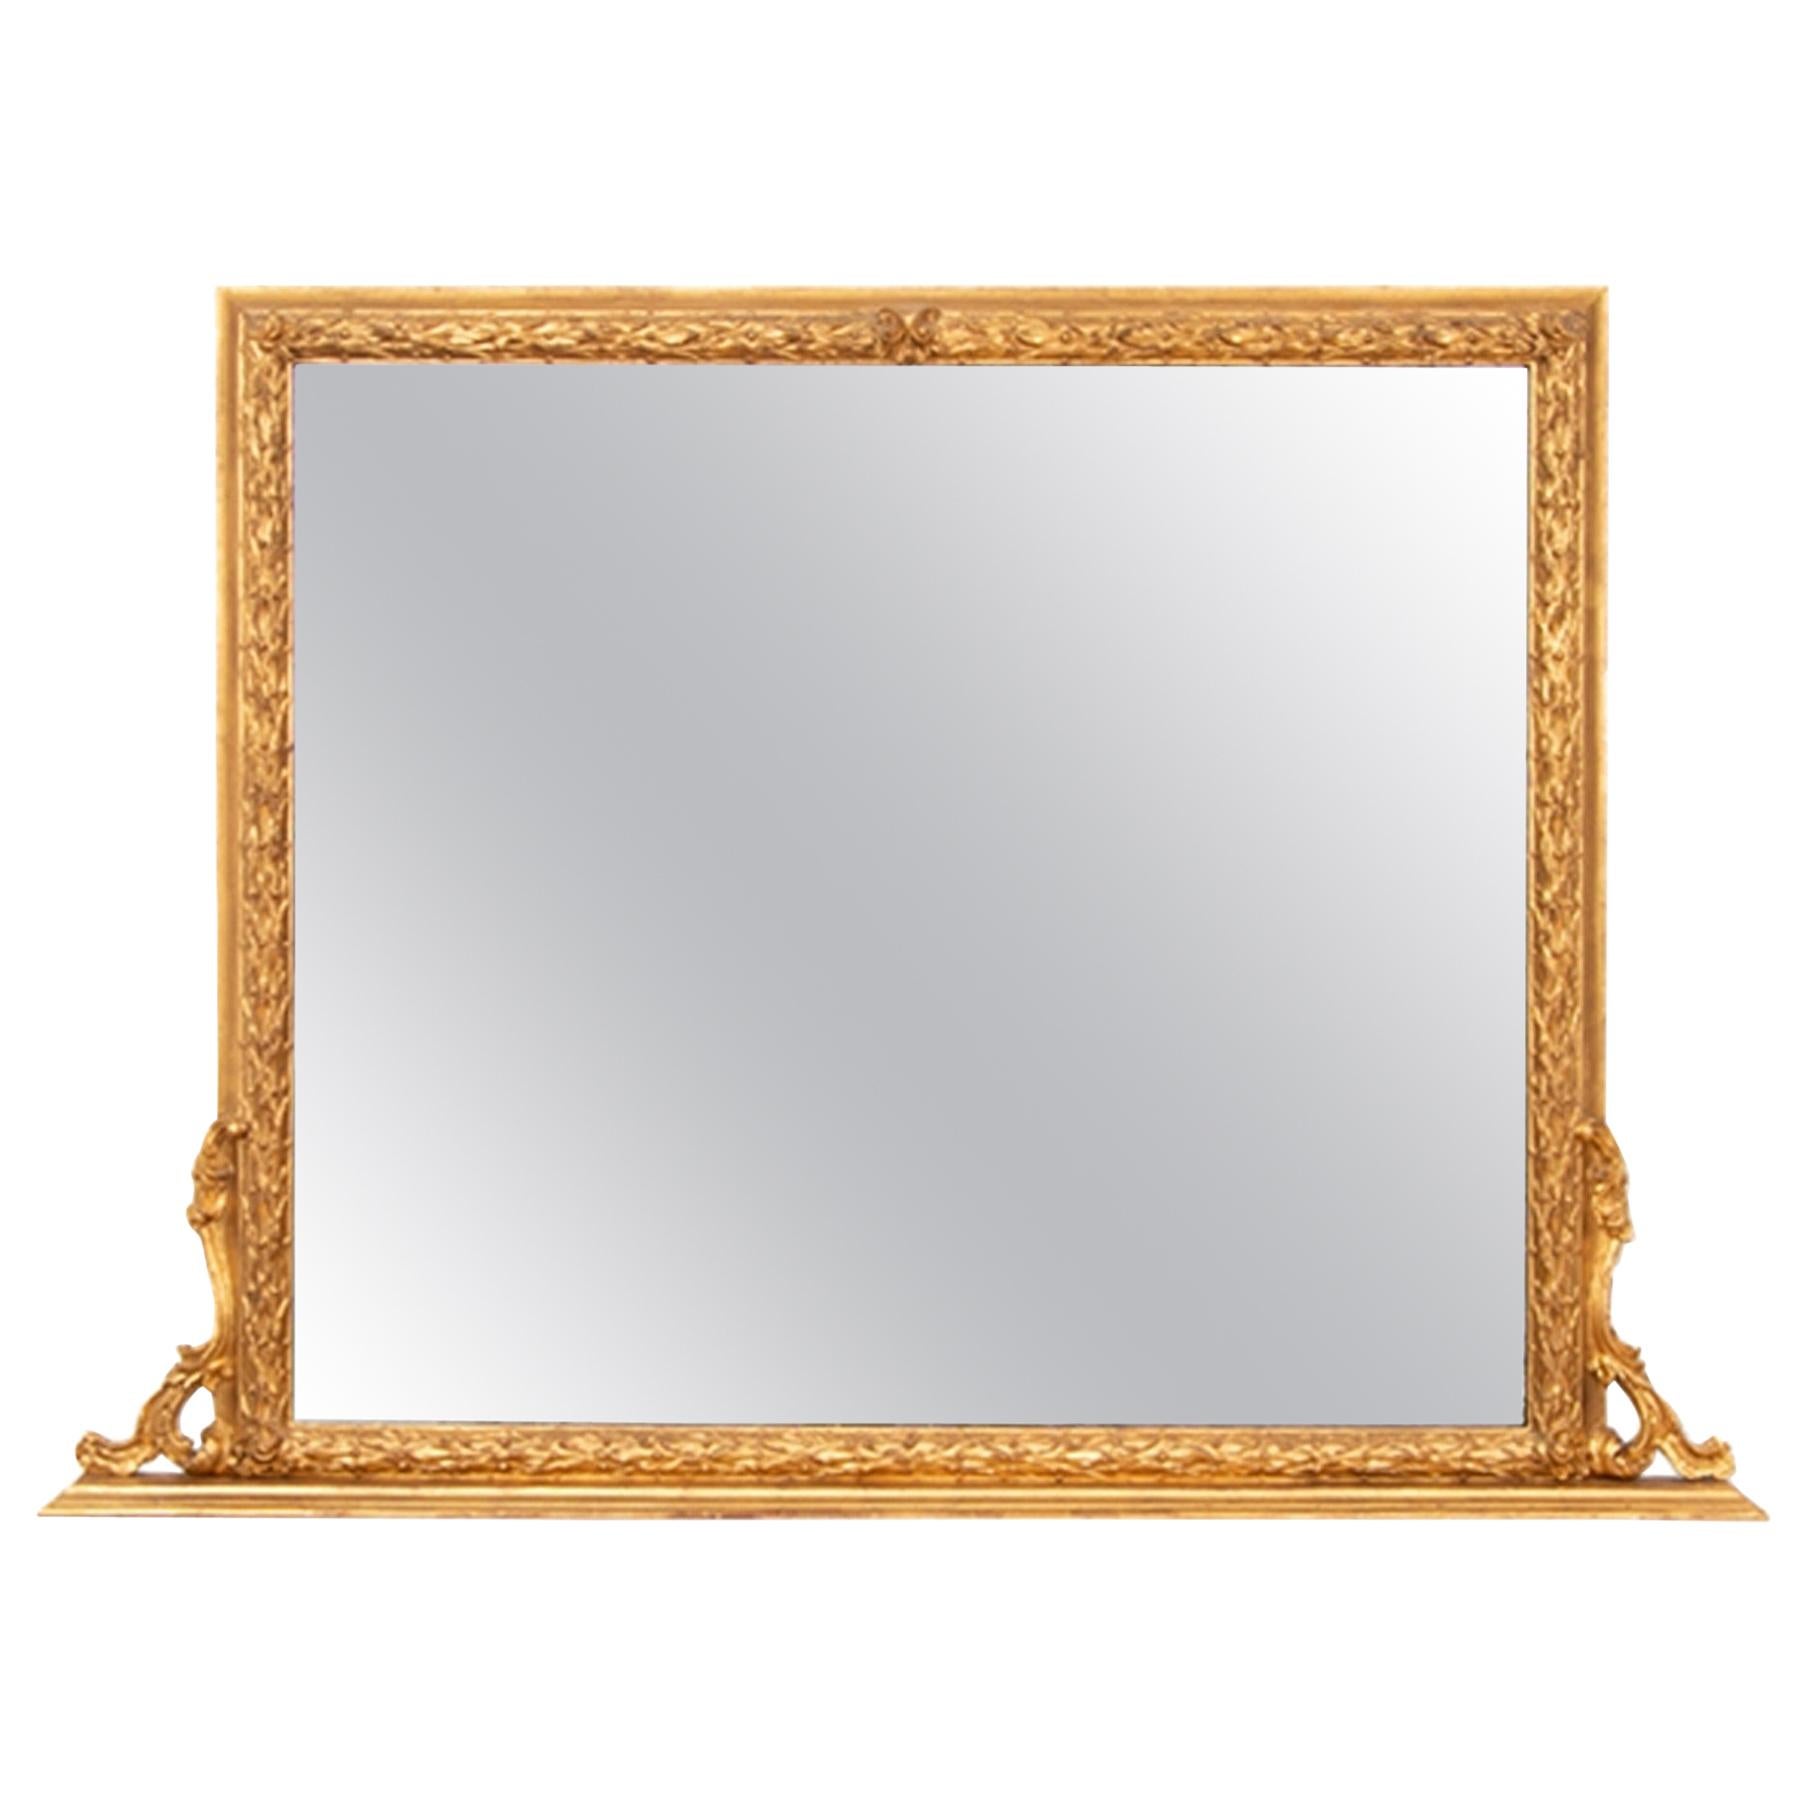 Antique Gilt Over Mantel Mirror